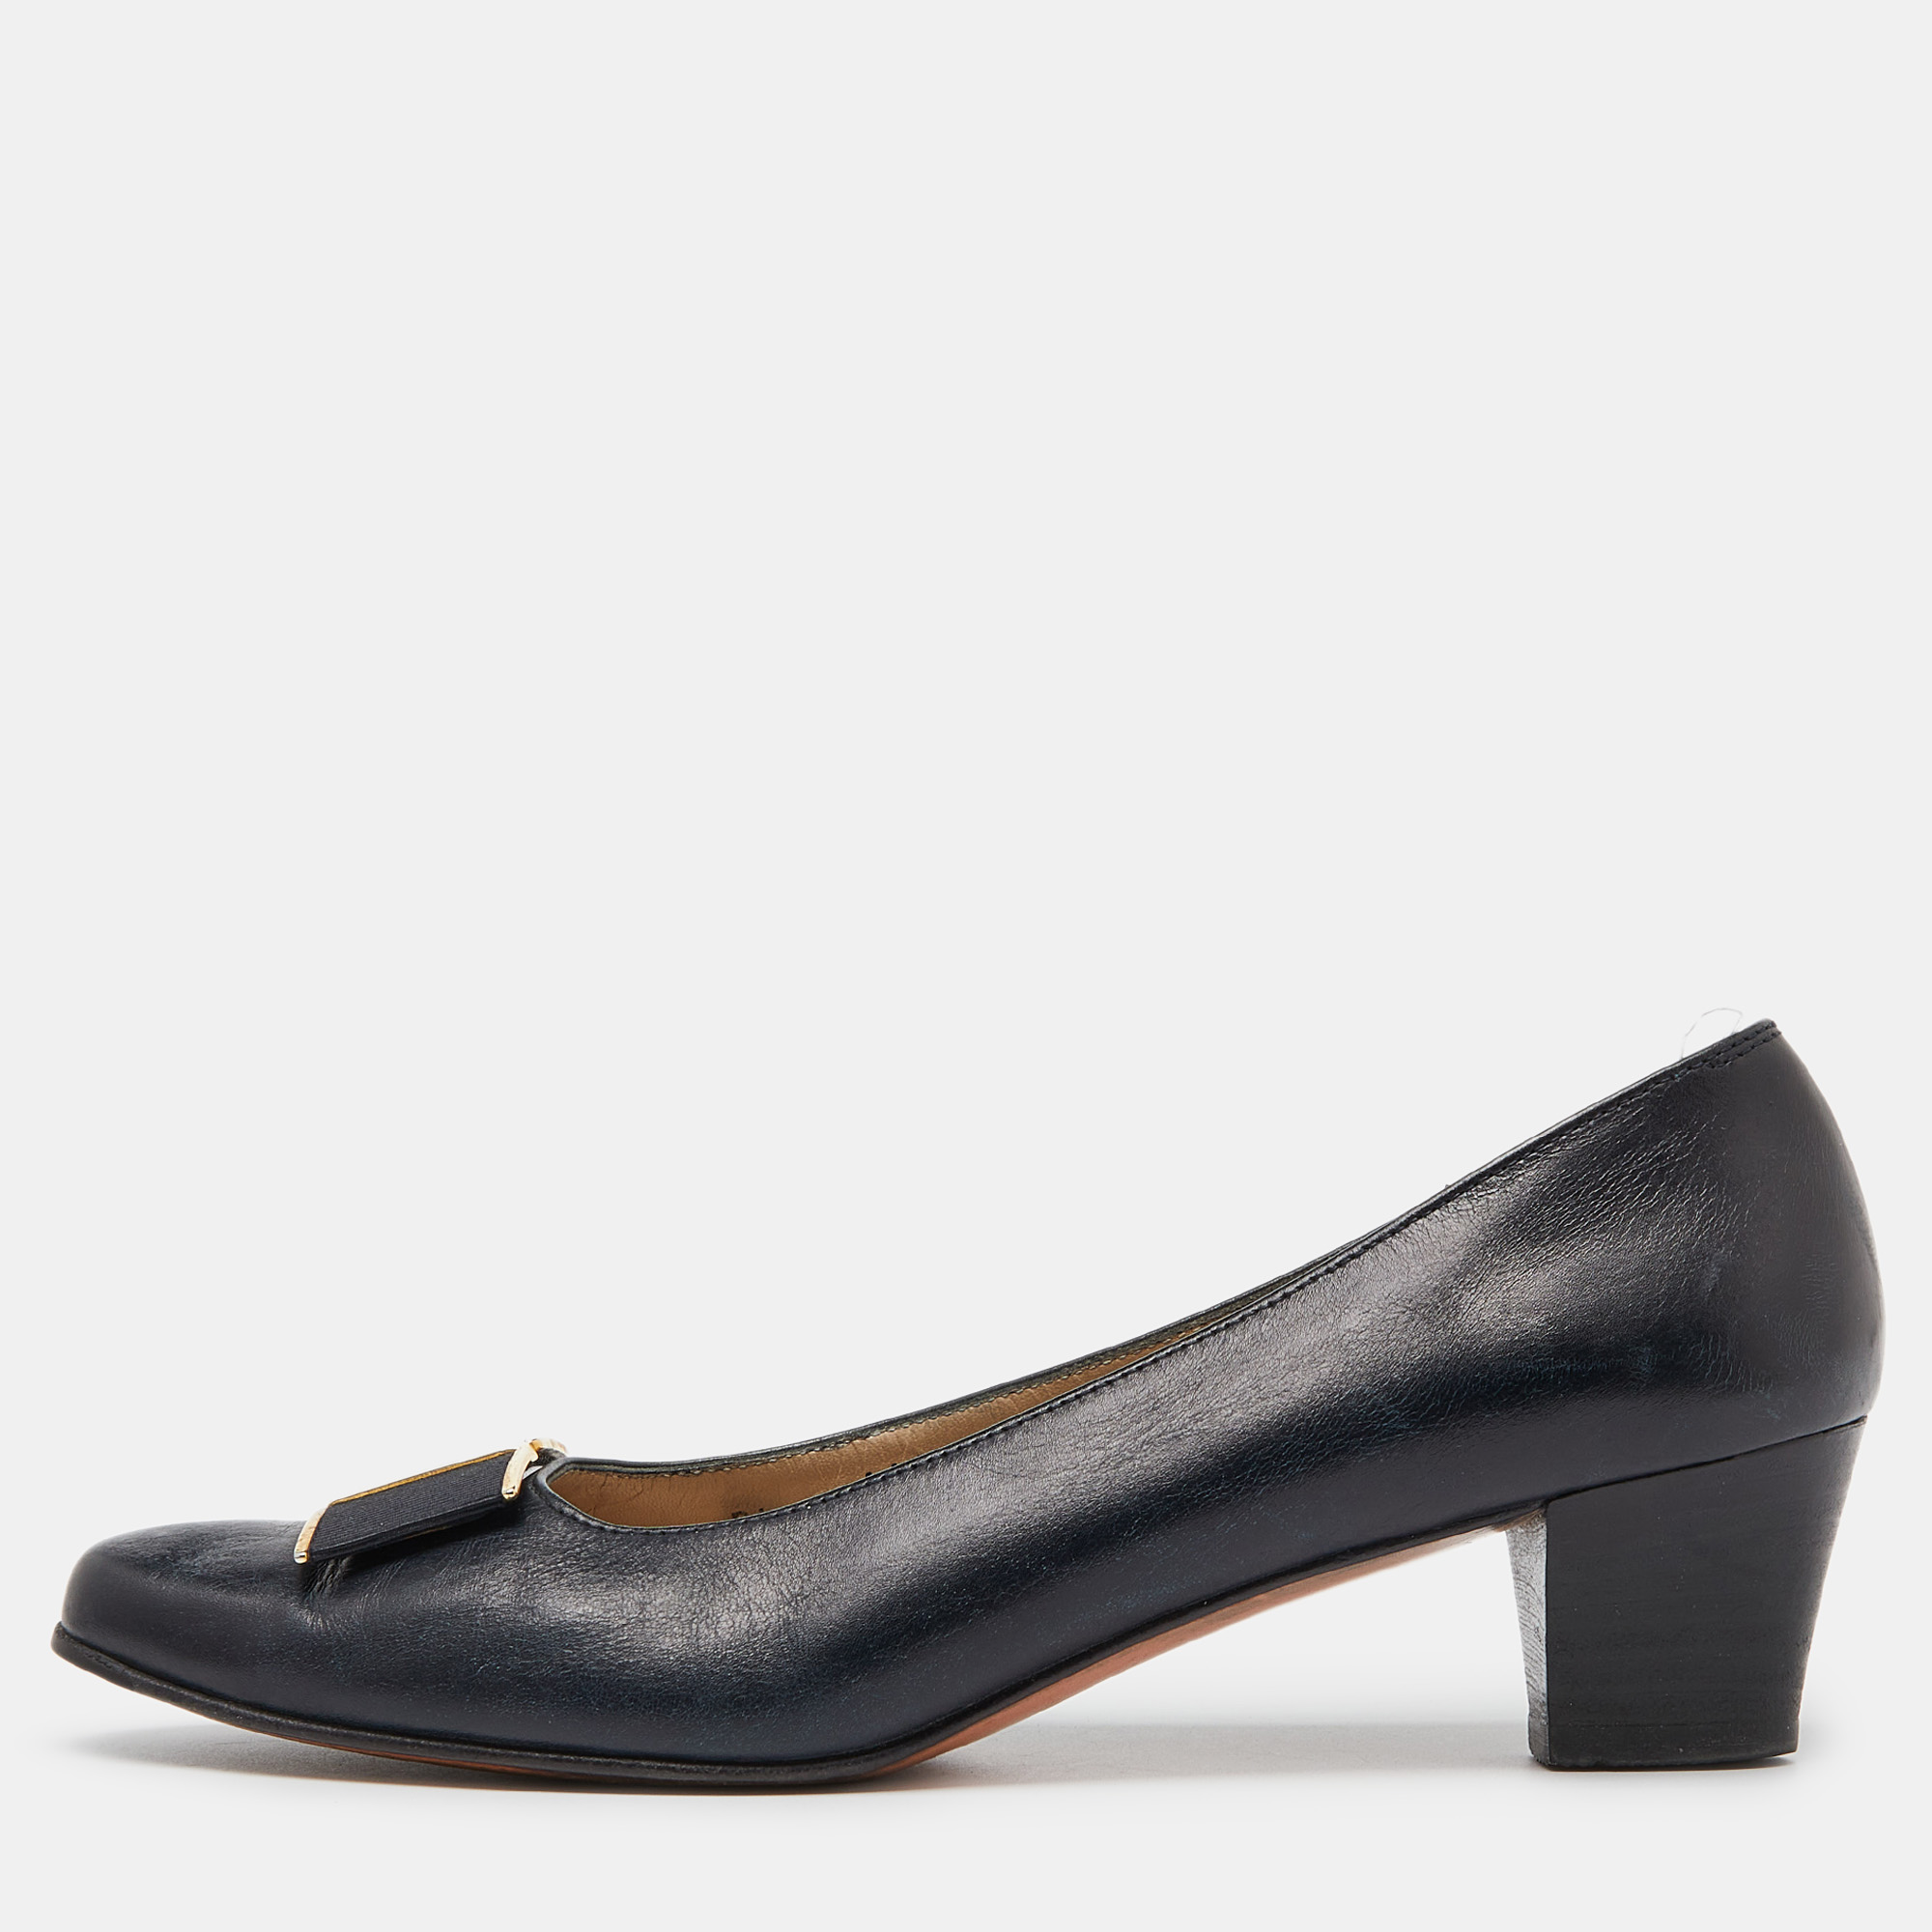 Salvatore ferragamo blue leather block heel pumps size 38.5